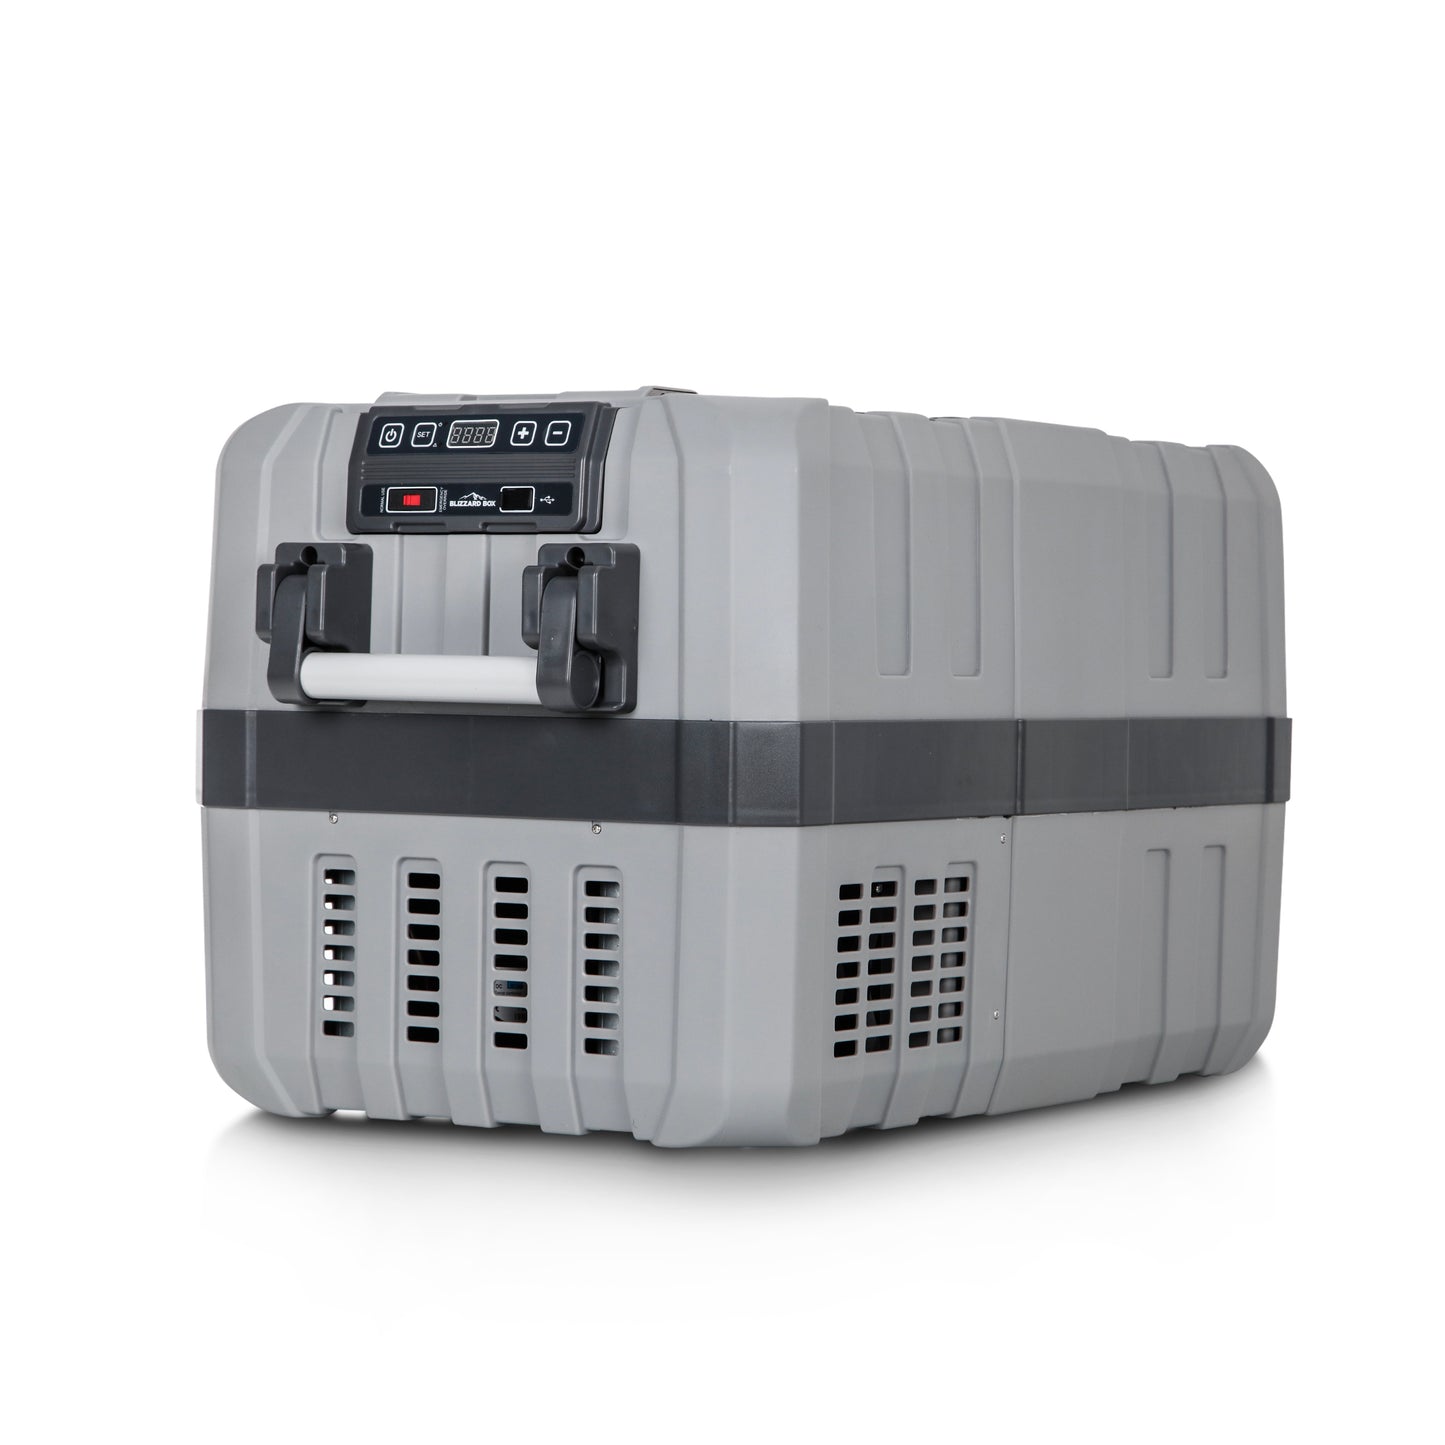 PROJECT X - AC57859-1 - Refrigerator - Blizzard Box - 56QT/53L Electric Portable Fridge / Freezer - P/N: AC57859-1